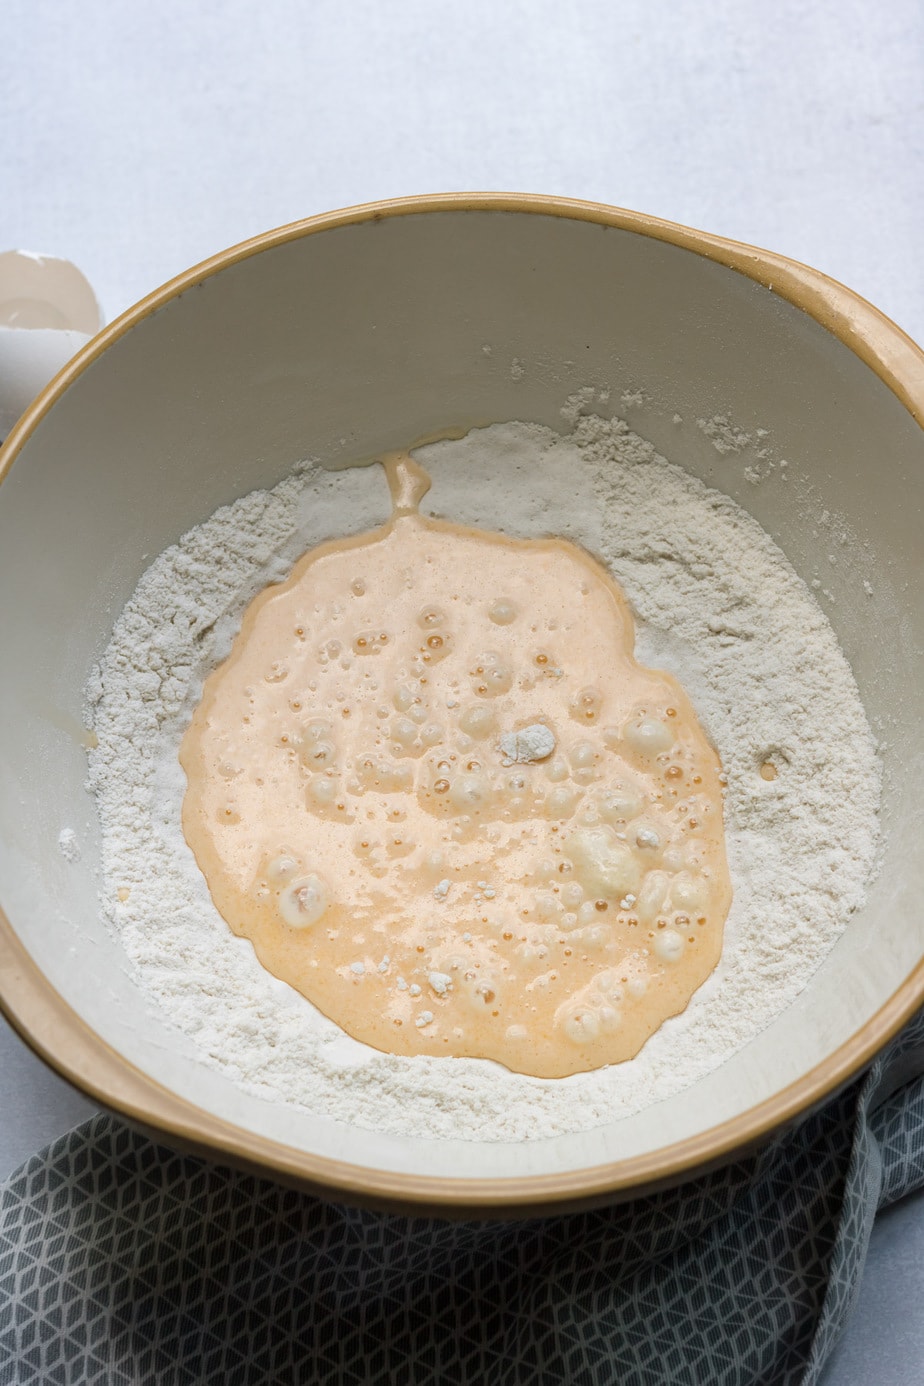 Wet batter in bowl of flour mixture.